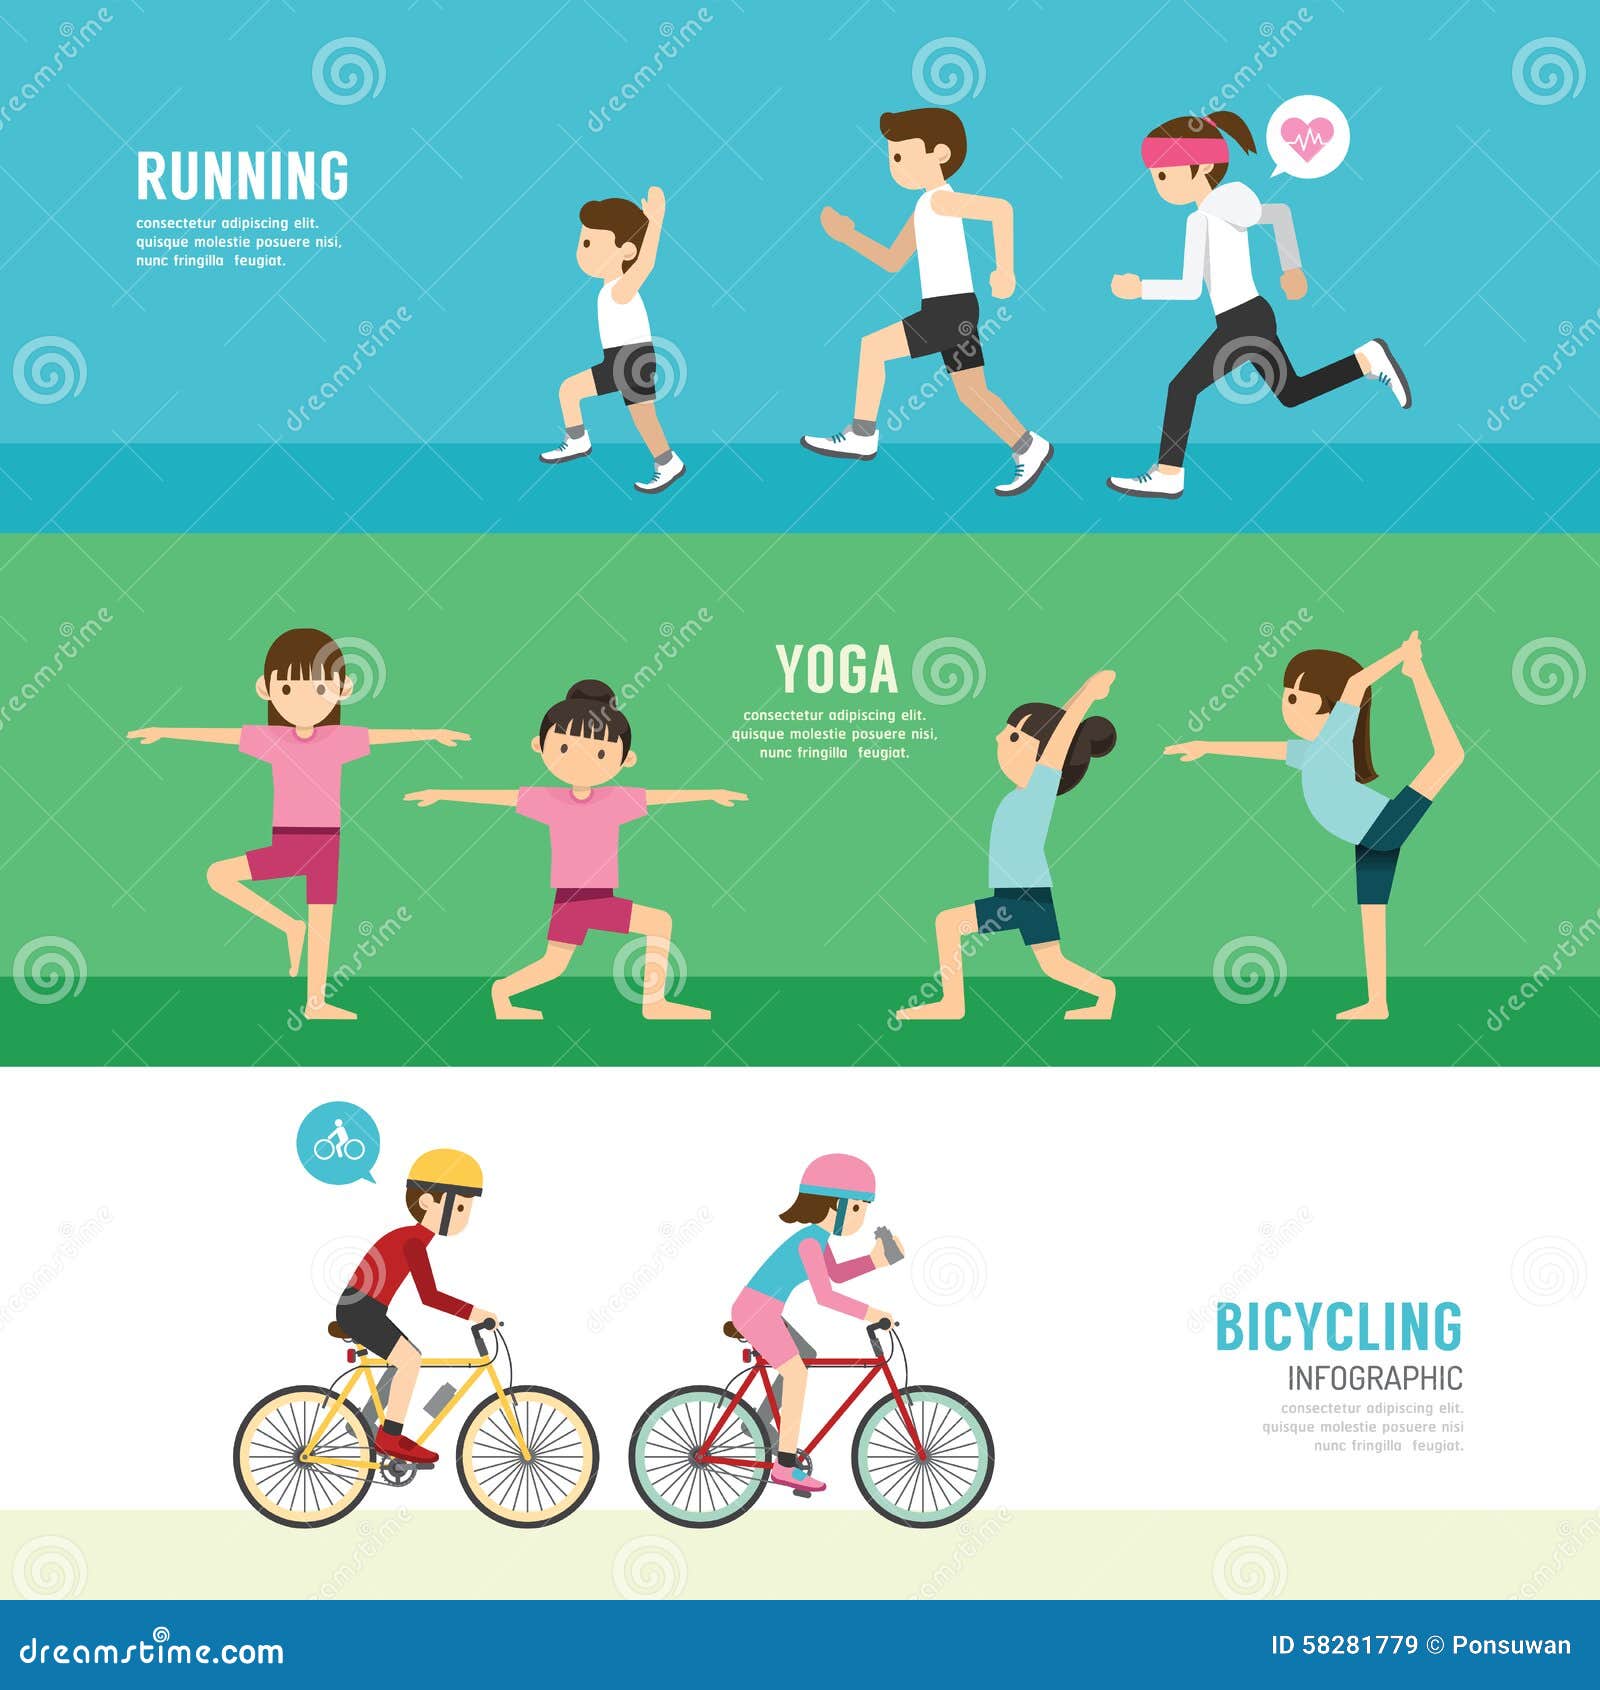 Sports Exercise Illustrations & Vectors